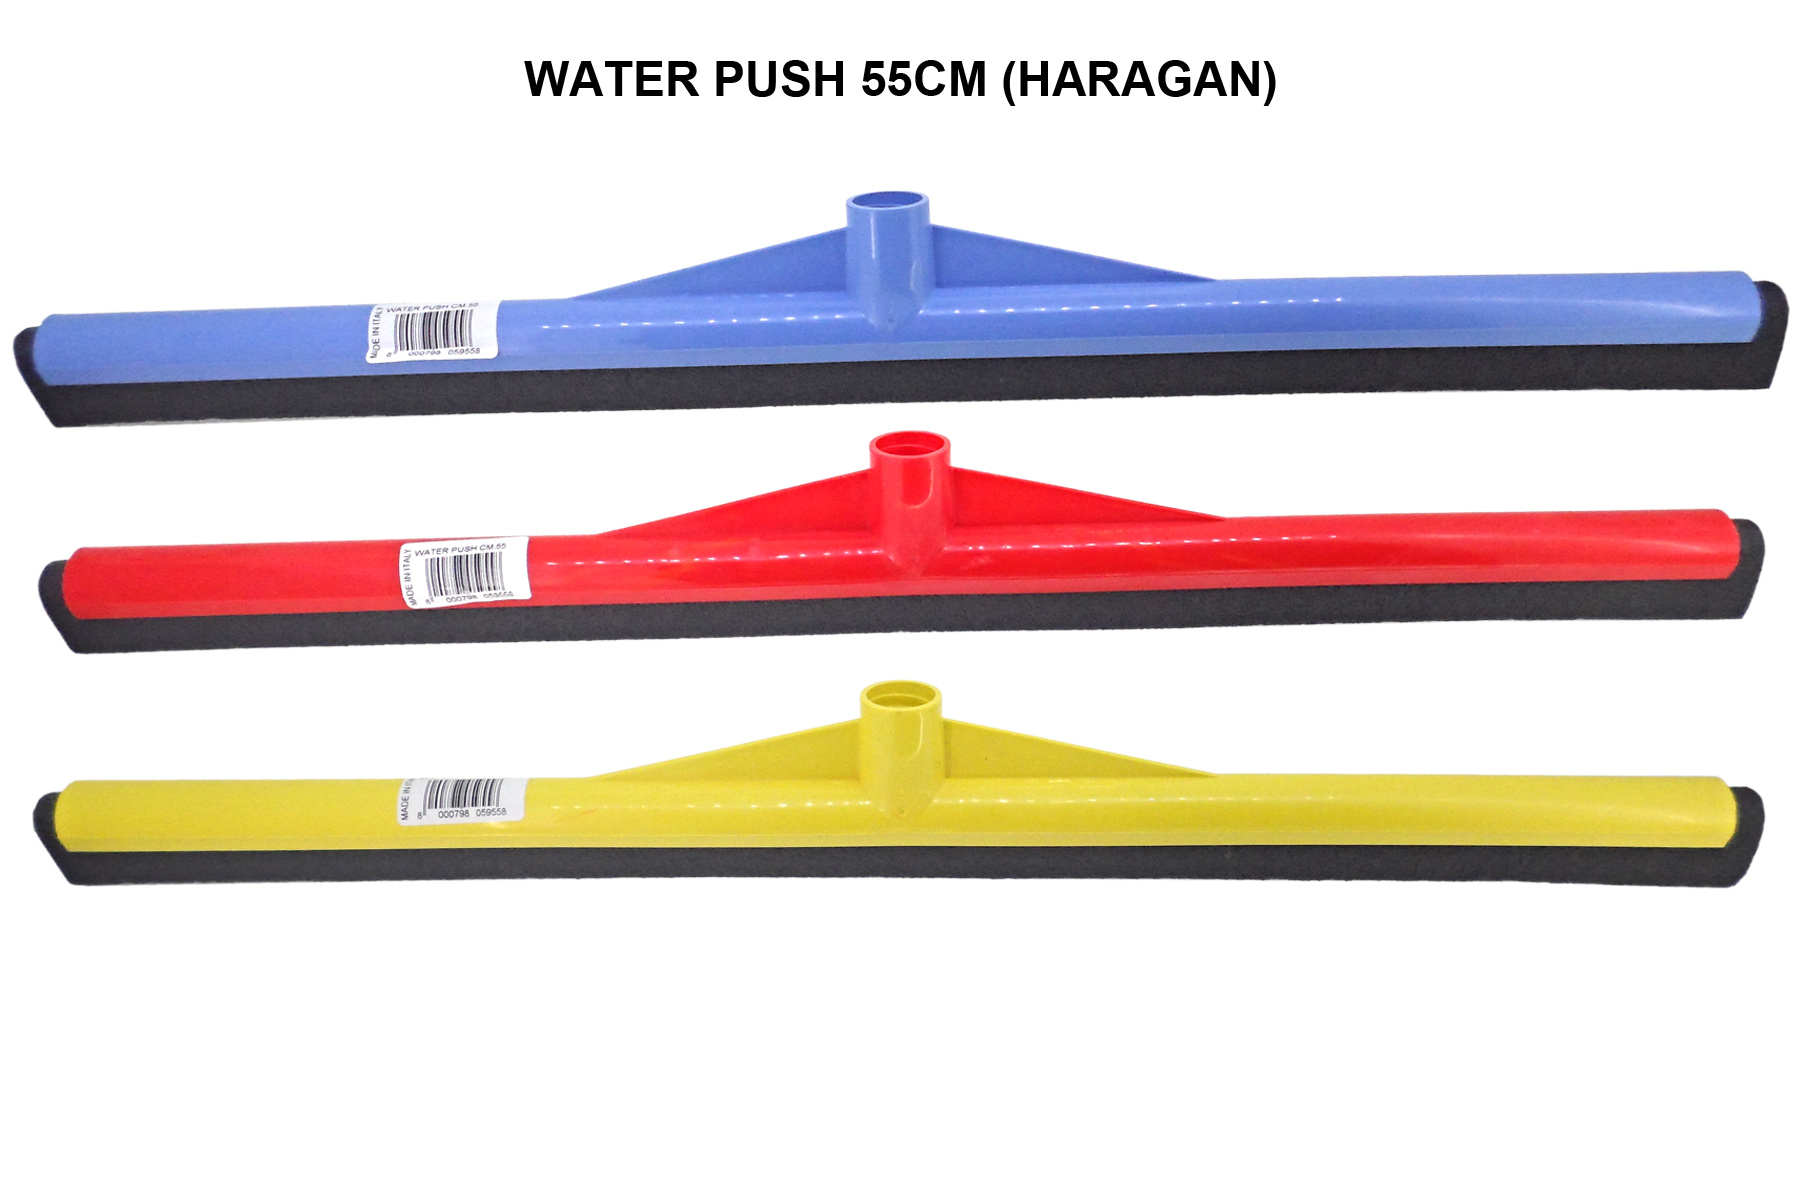 WATER PUSH 55CM (HARAGAN)